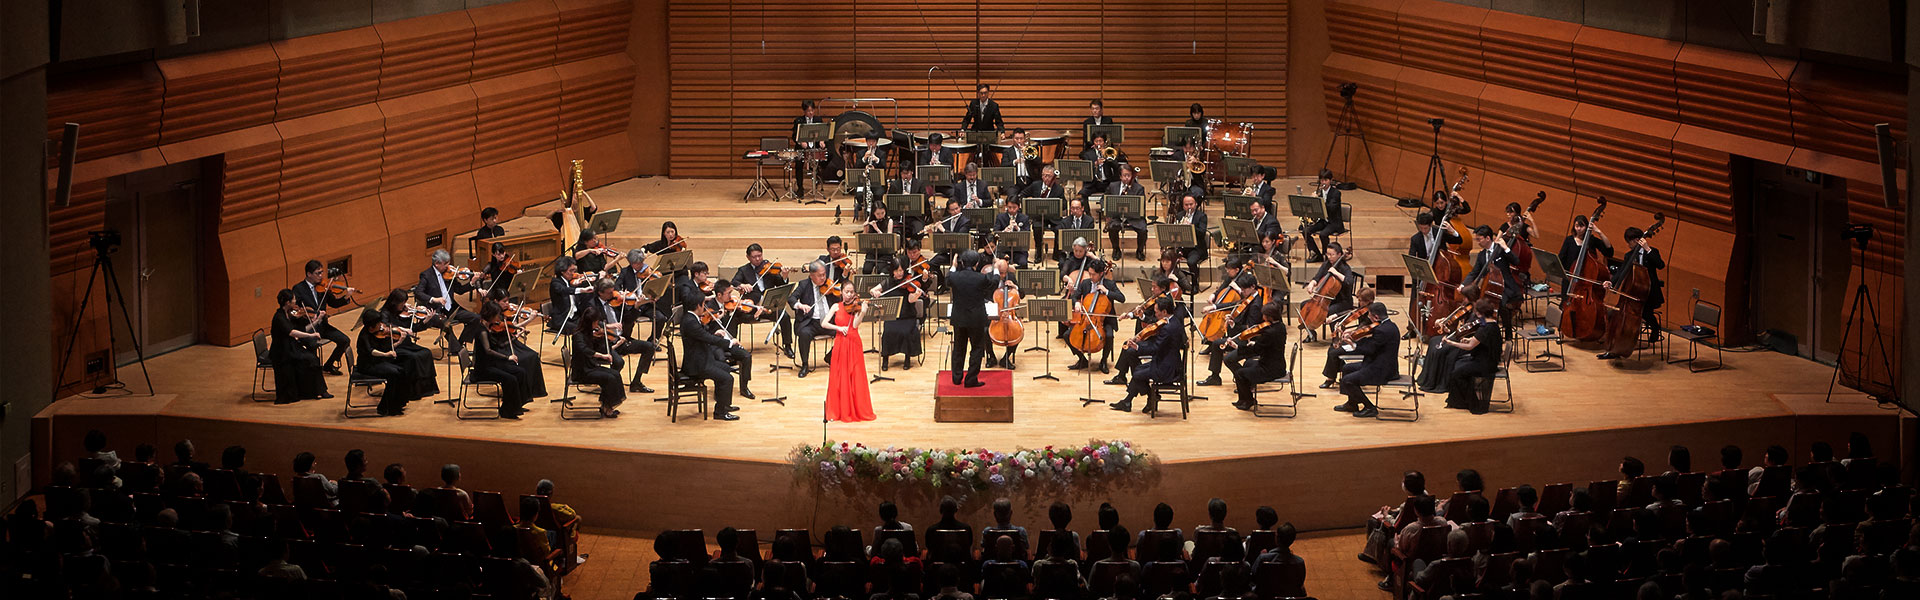 JANG Yoojin Violin Recital in Sendai | Sendai International Music Competition Official Website